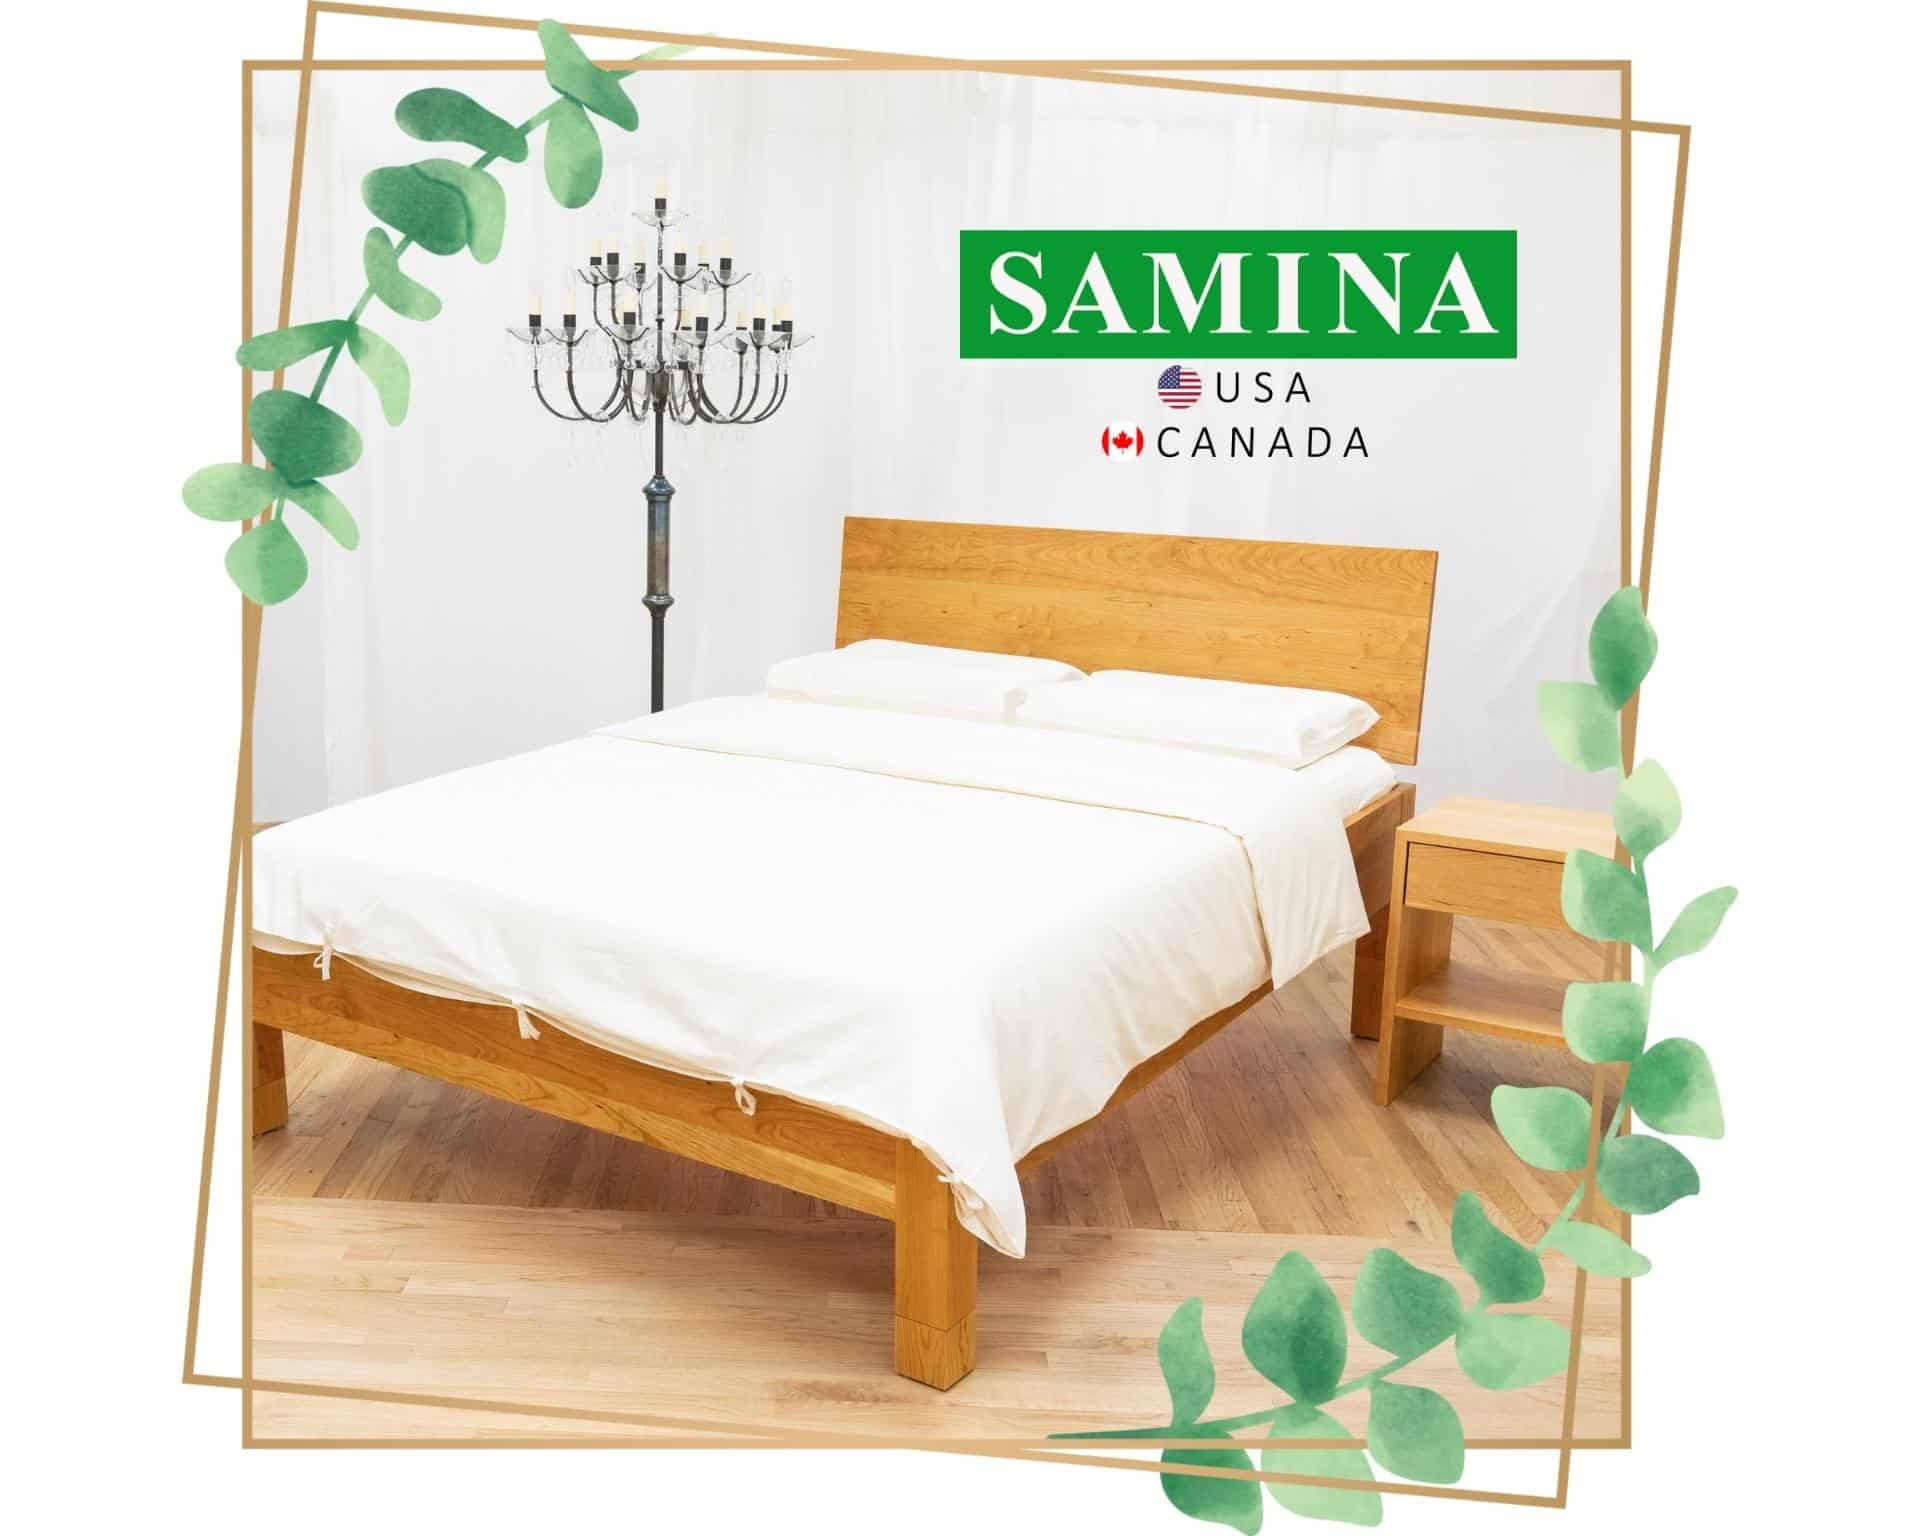 SAMINA Healthy Sleep System for your naturally healthy sleep.